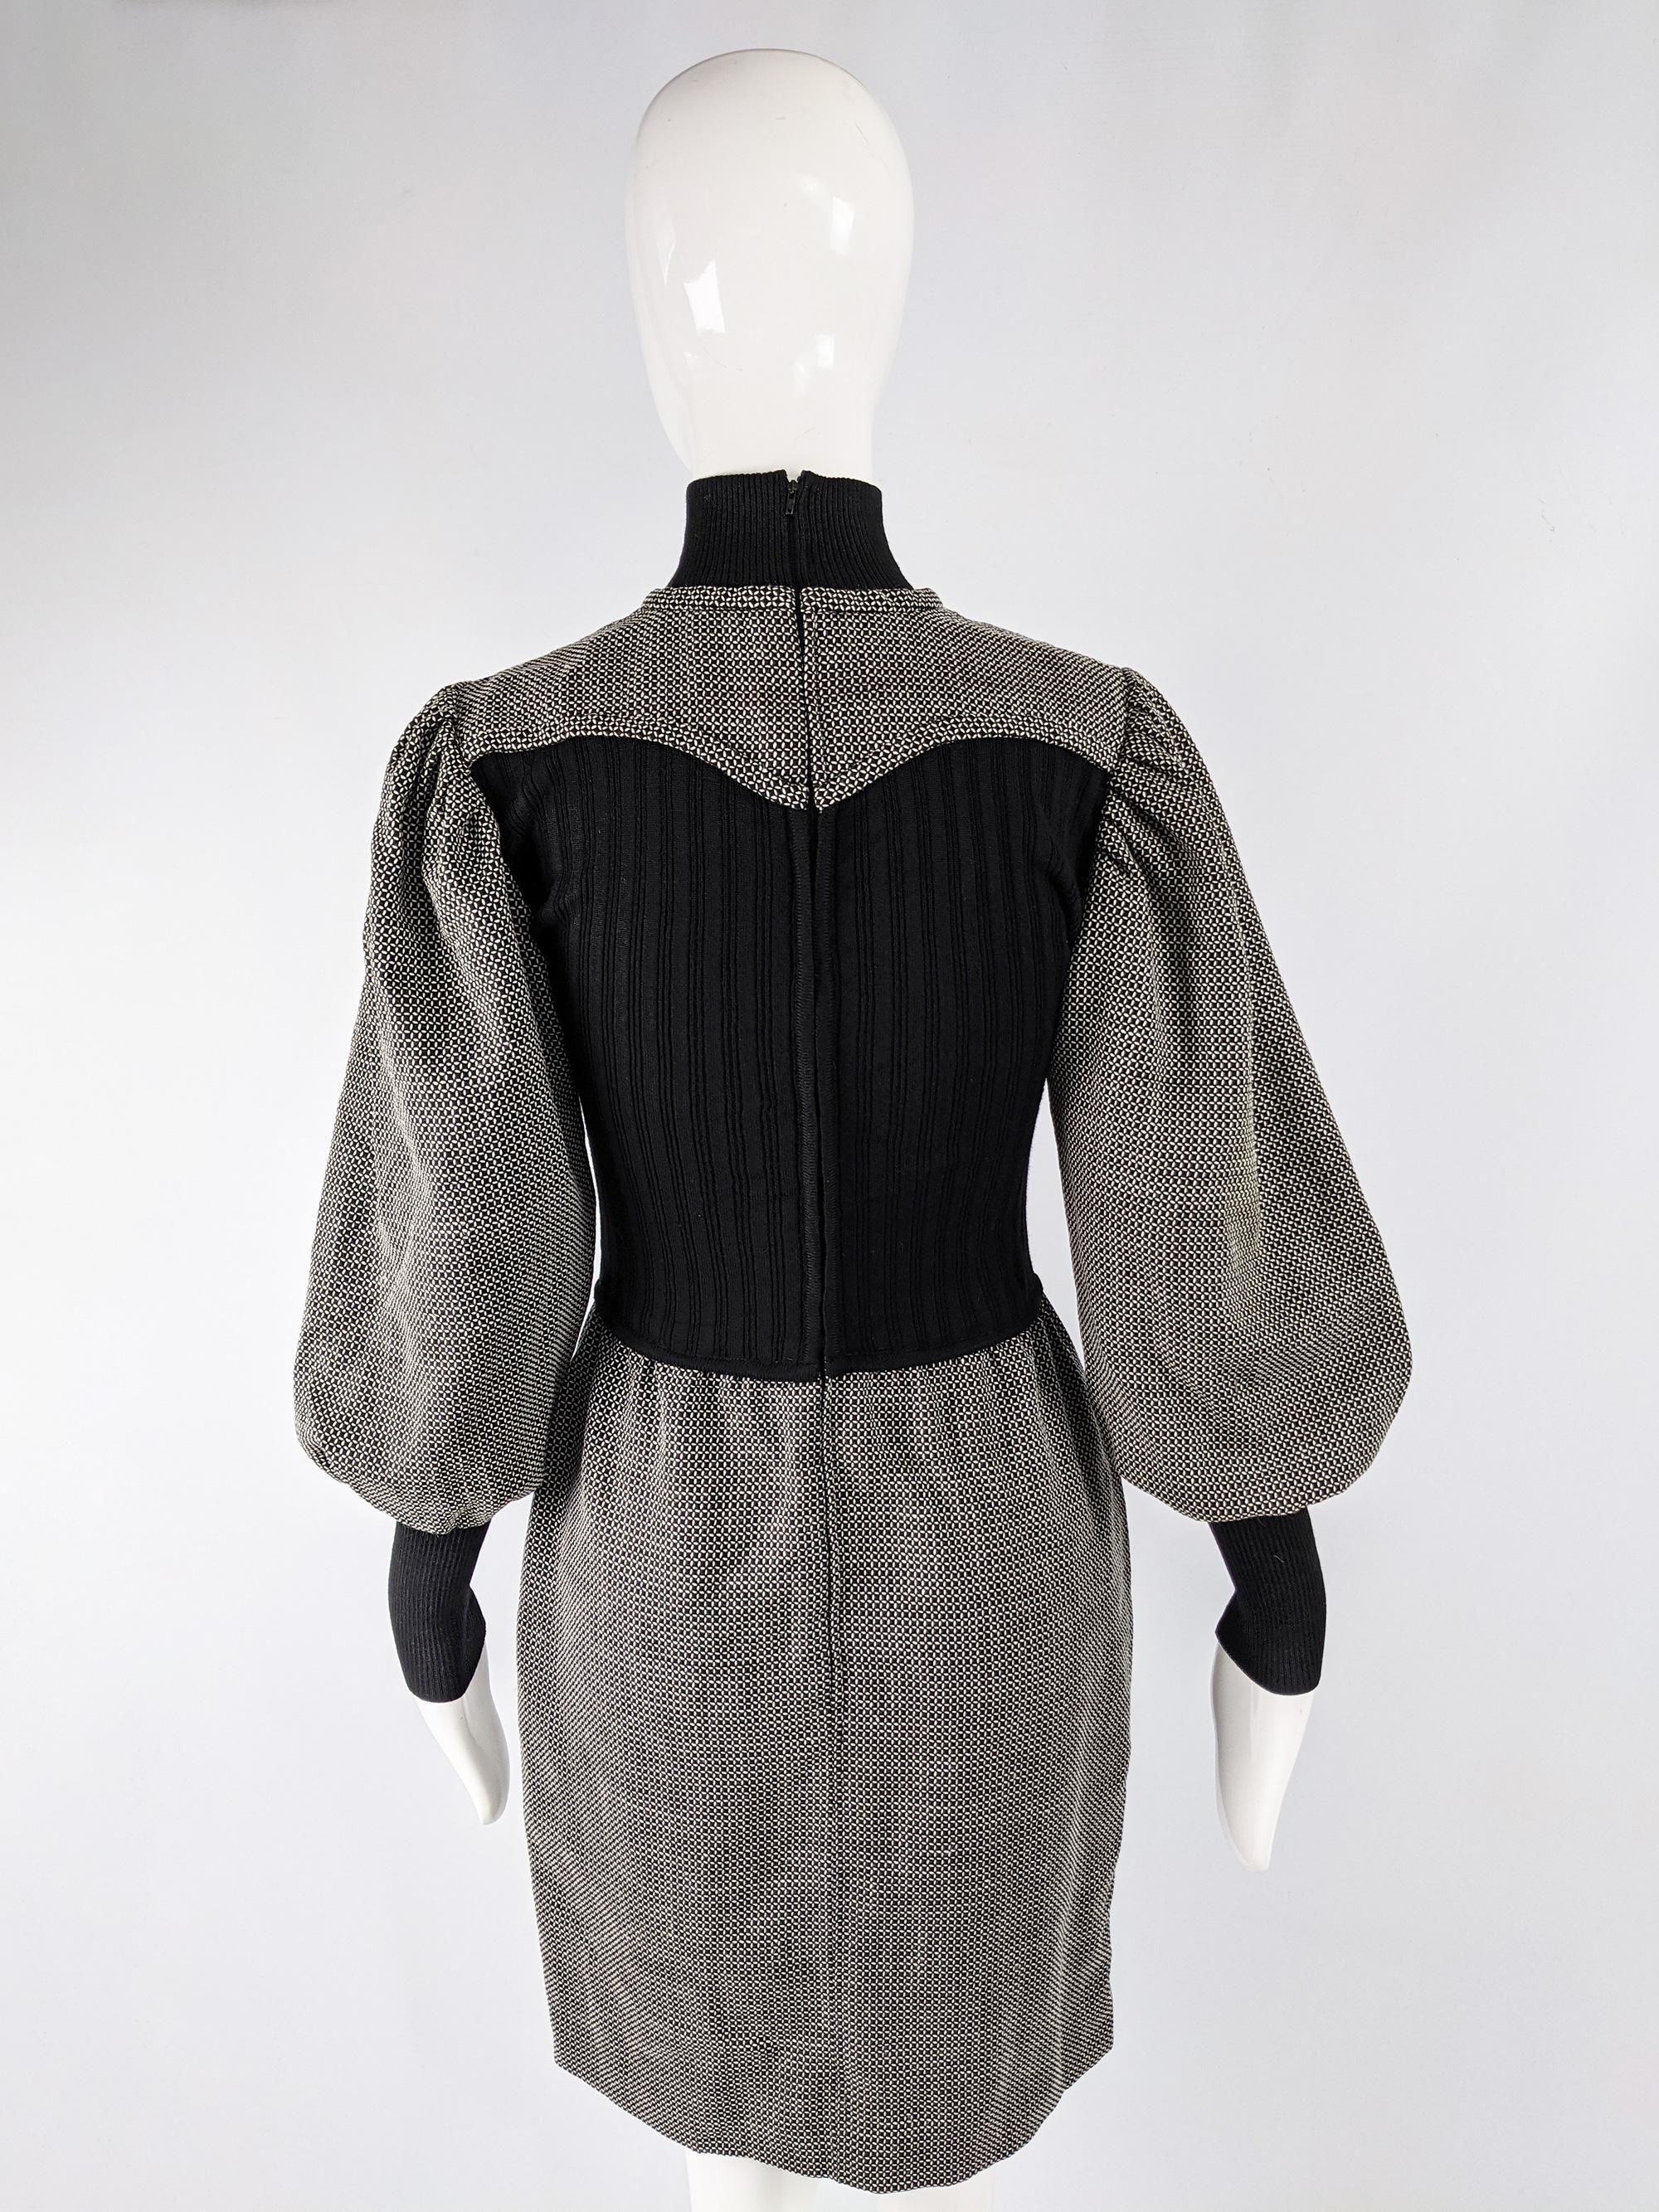 Emanuel Ungaro Black & White Puffed Sleeve Dress, 1980s For Sale 3